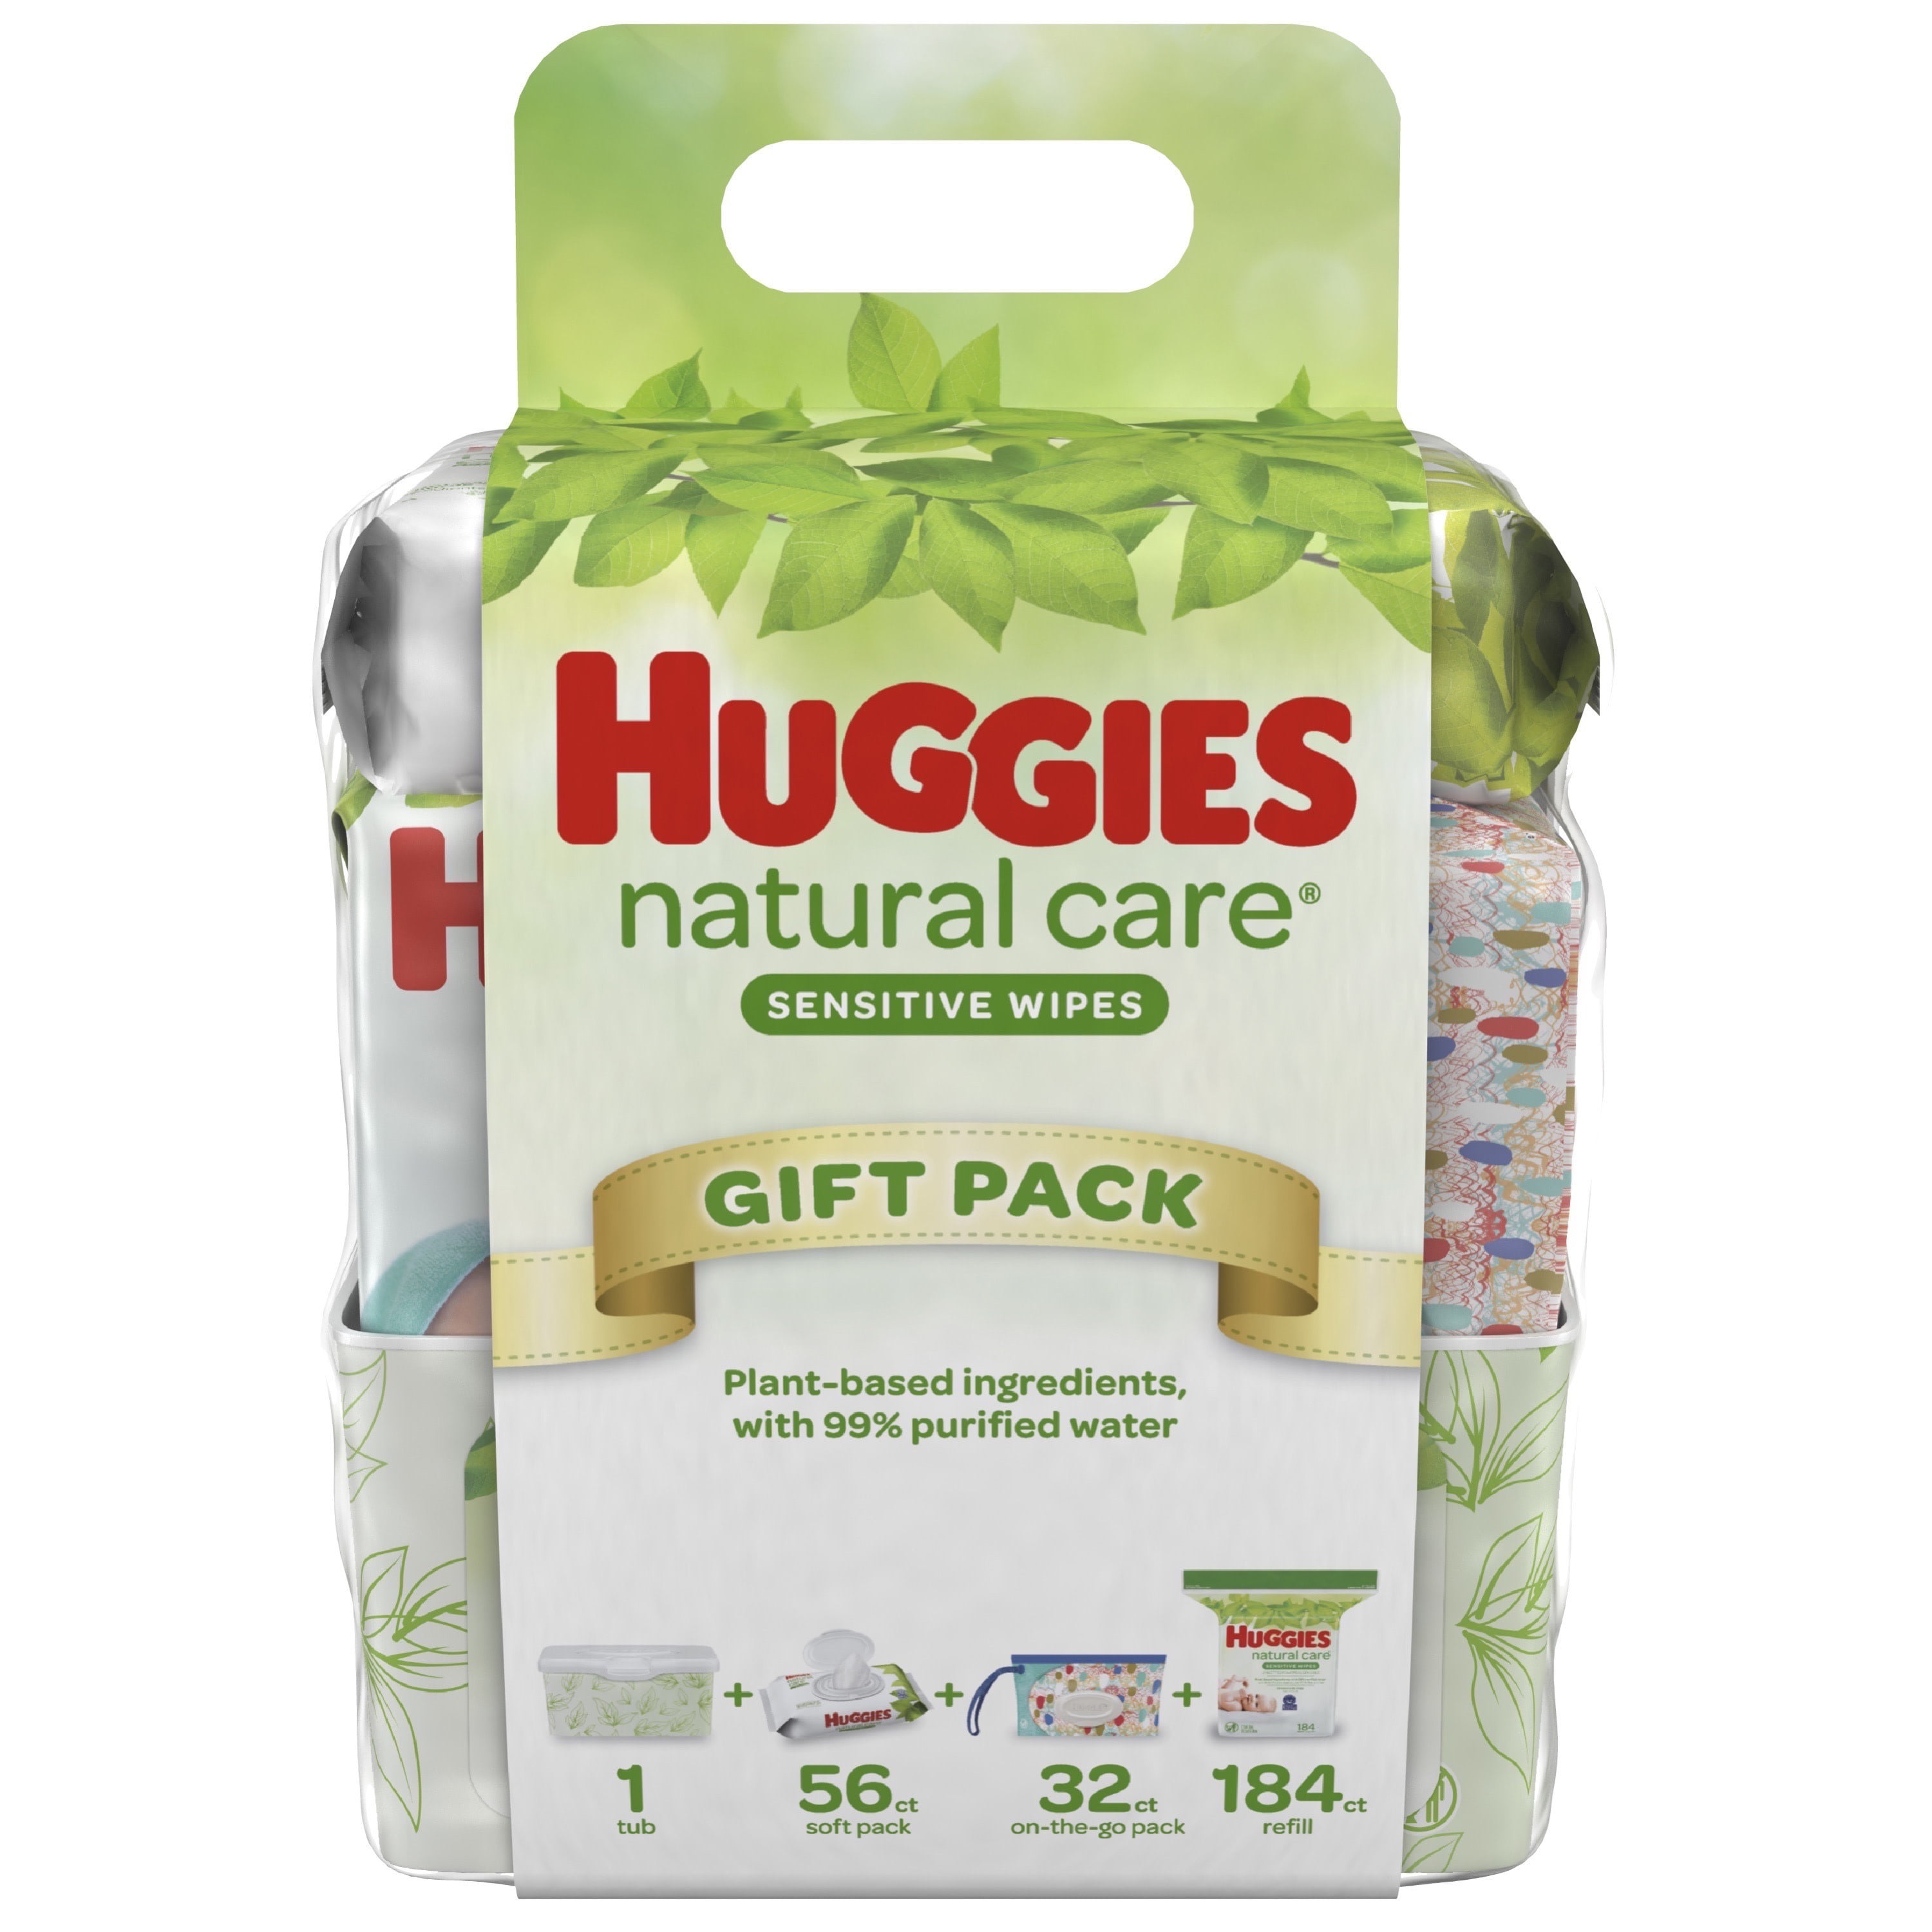 huggies gift pack walmart